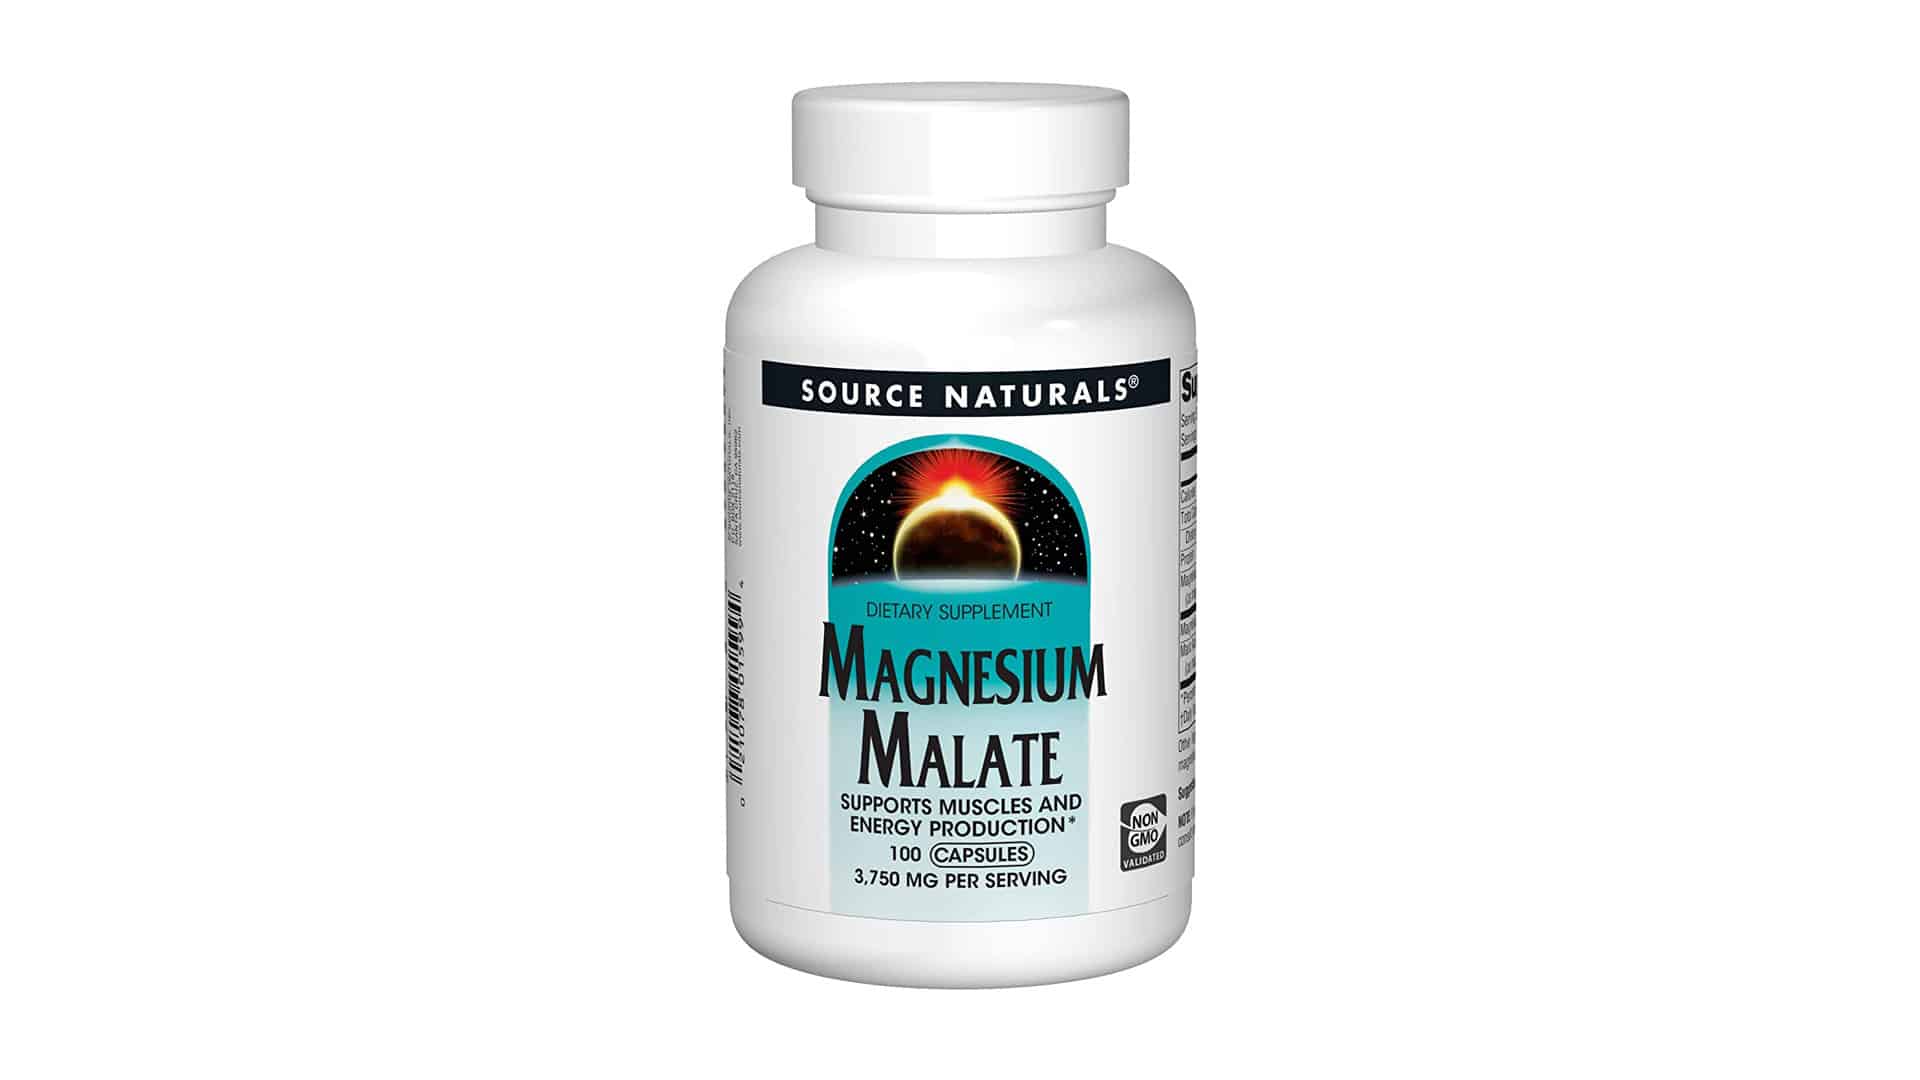 Source Naturals Magnesium Malate